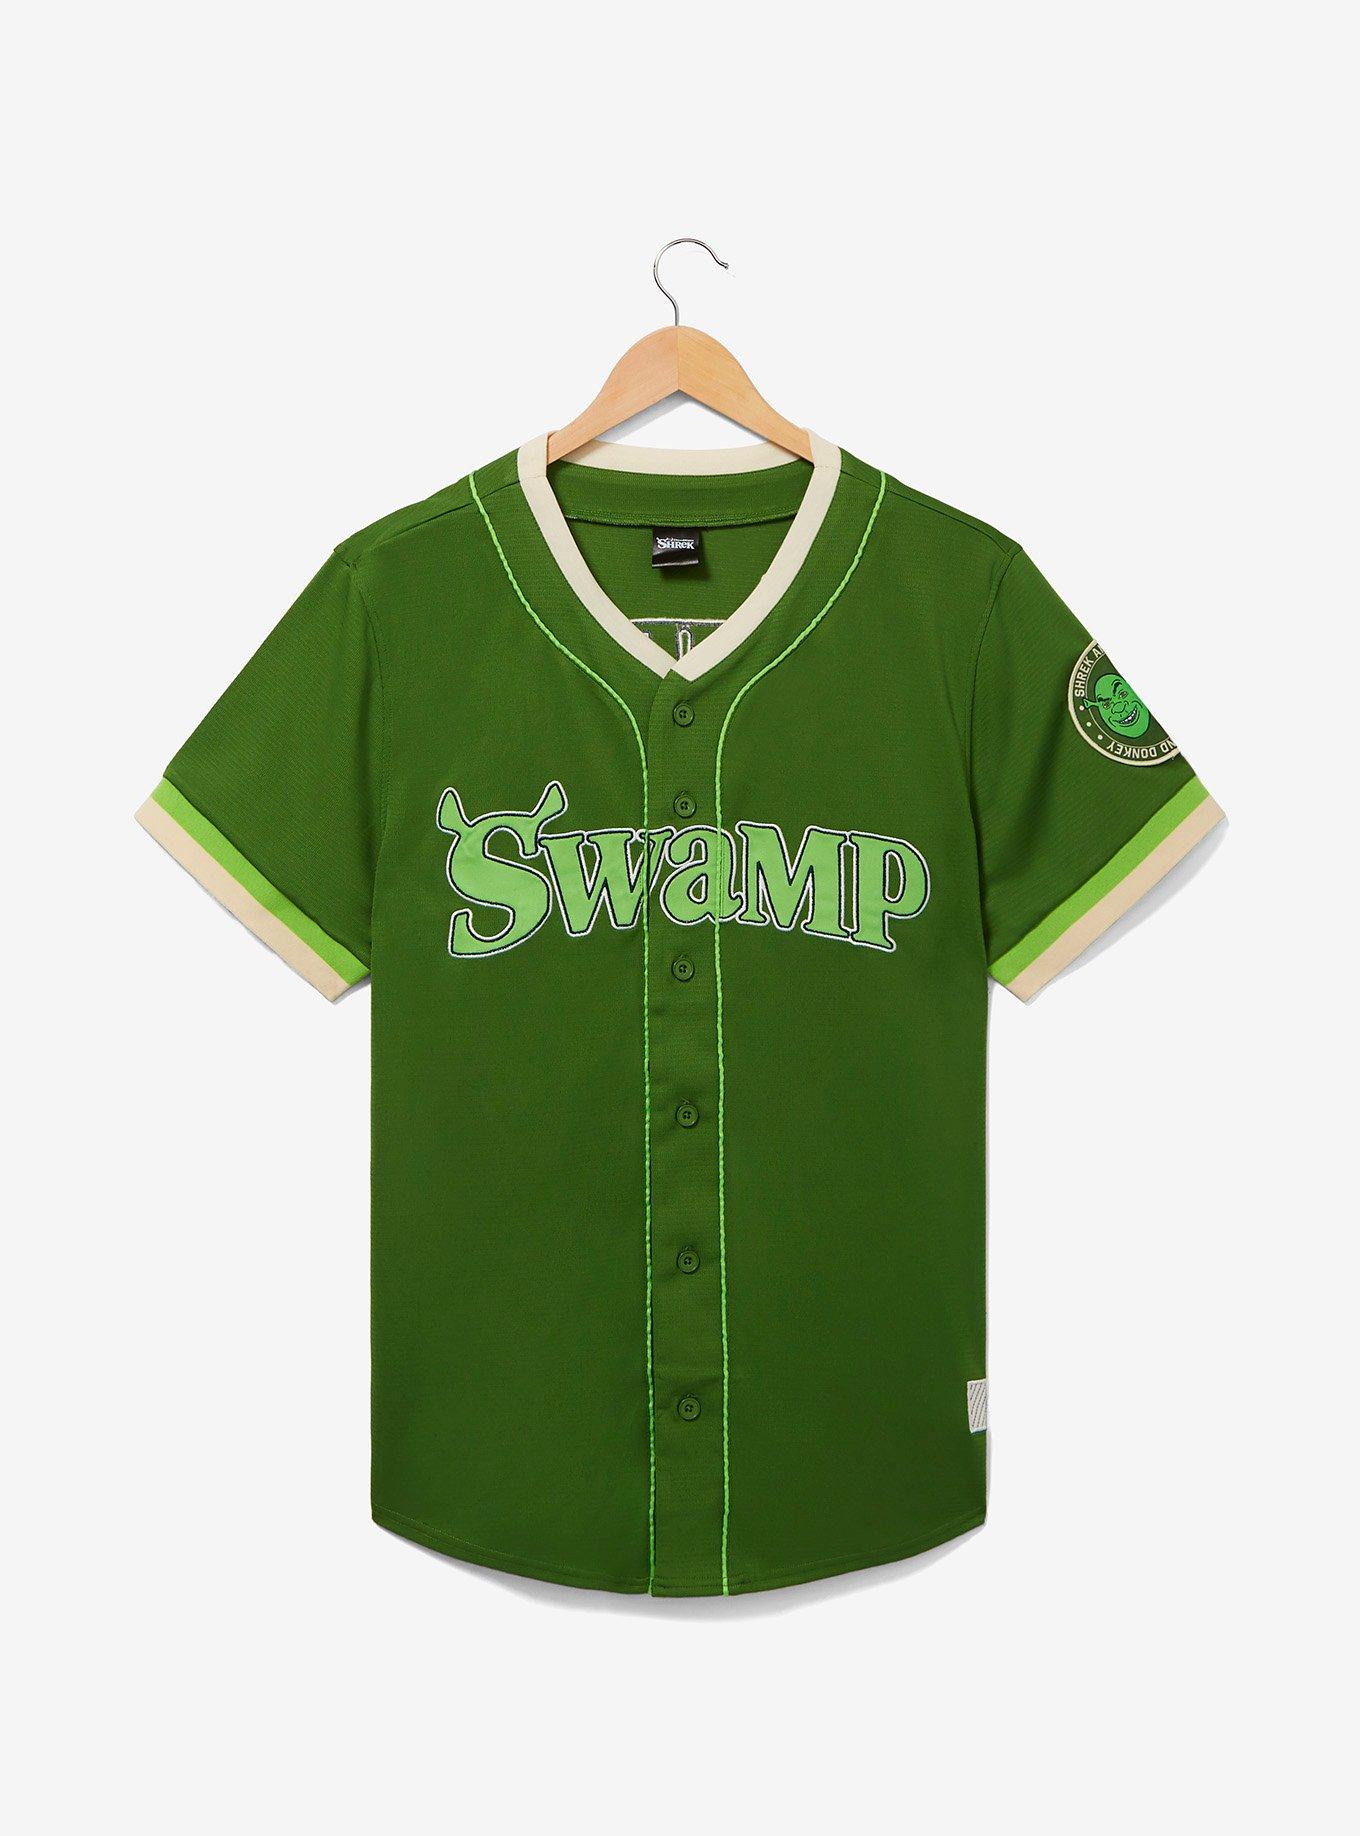 Shrek Swamp Baseball Jersey - BoxLunch Exclusive